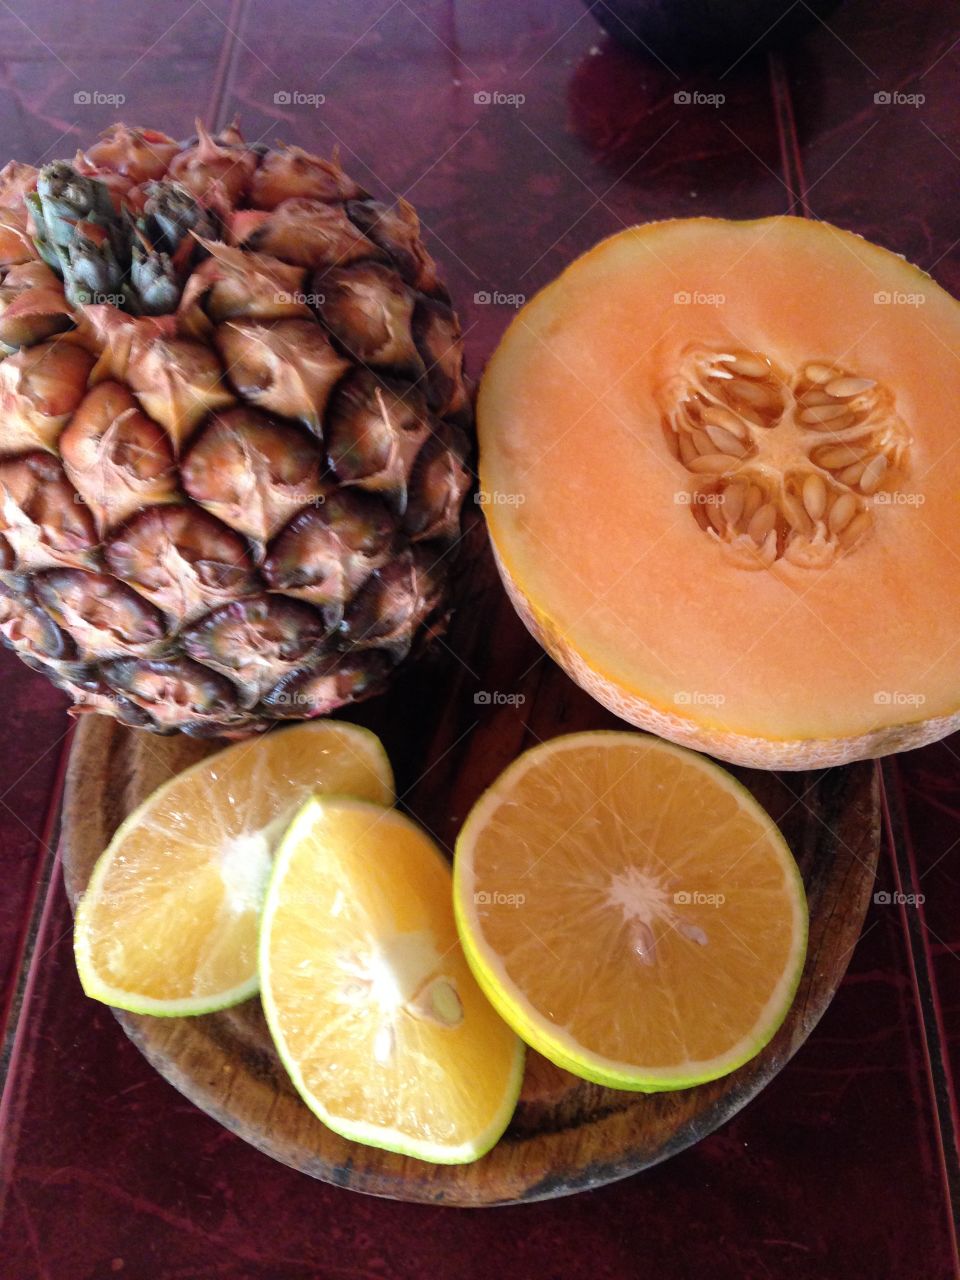 #fruta #fuit #food #alimento #comida #fresco #piña #orange #naranja #melon #fresco